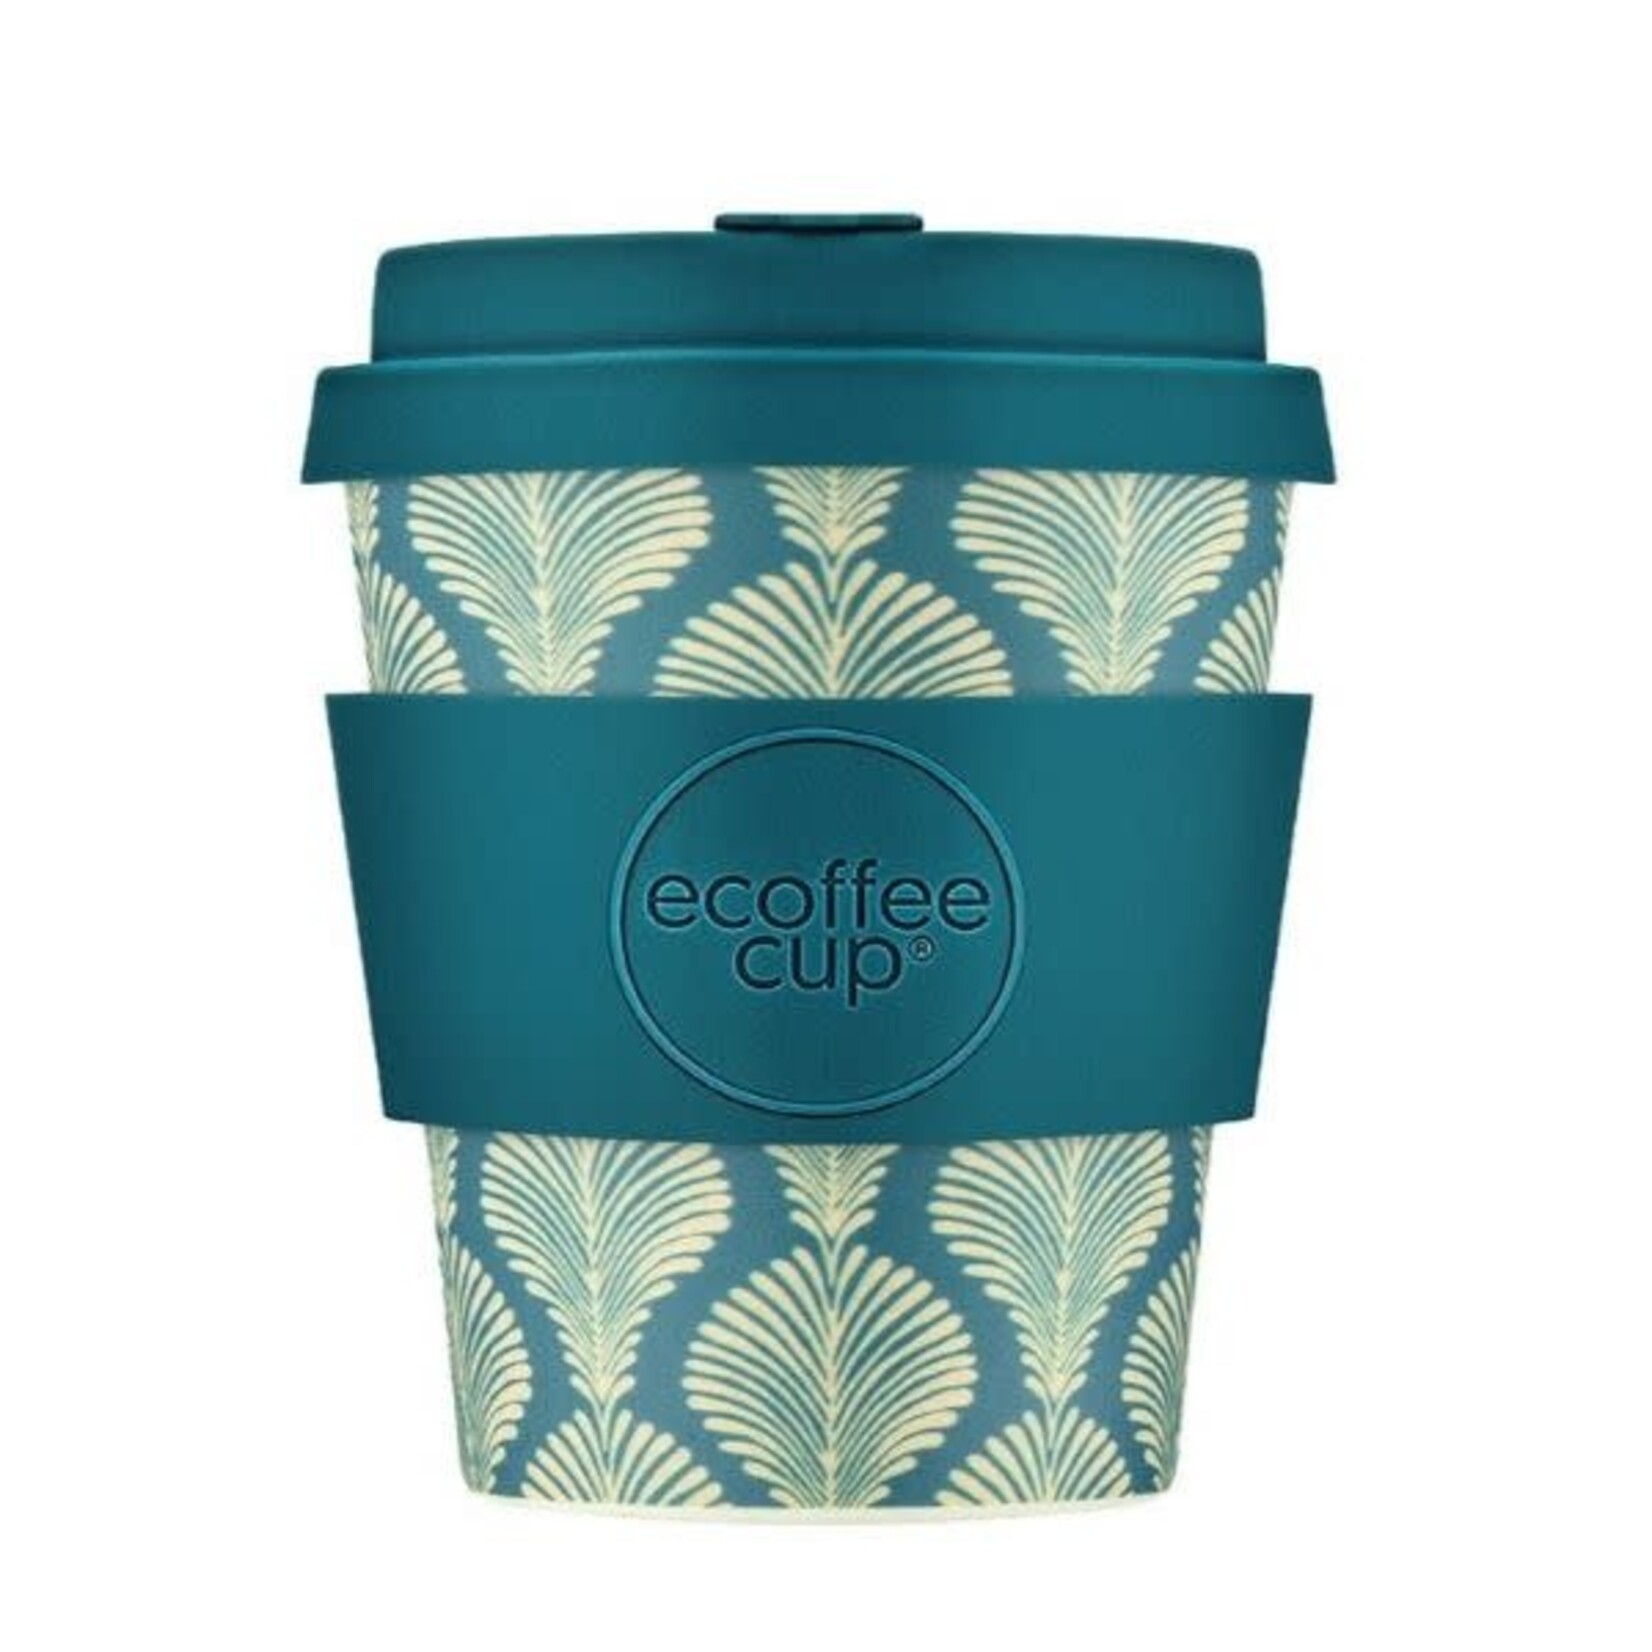 Ecoffee Cup Creasy Lu, 240ml/ 8oz